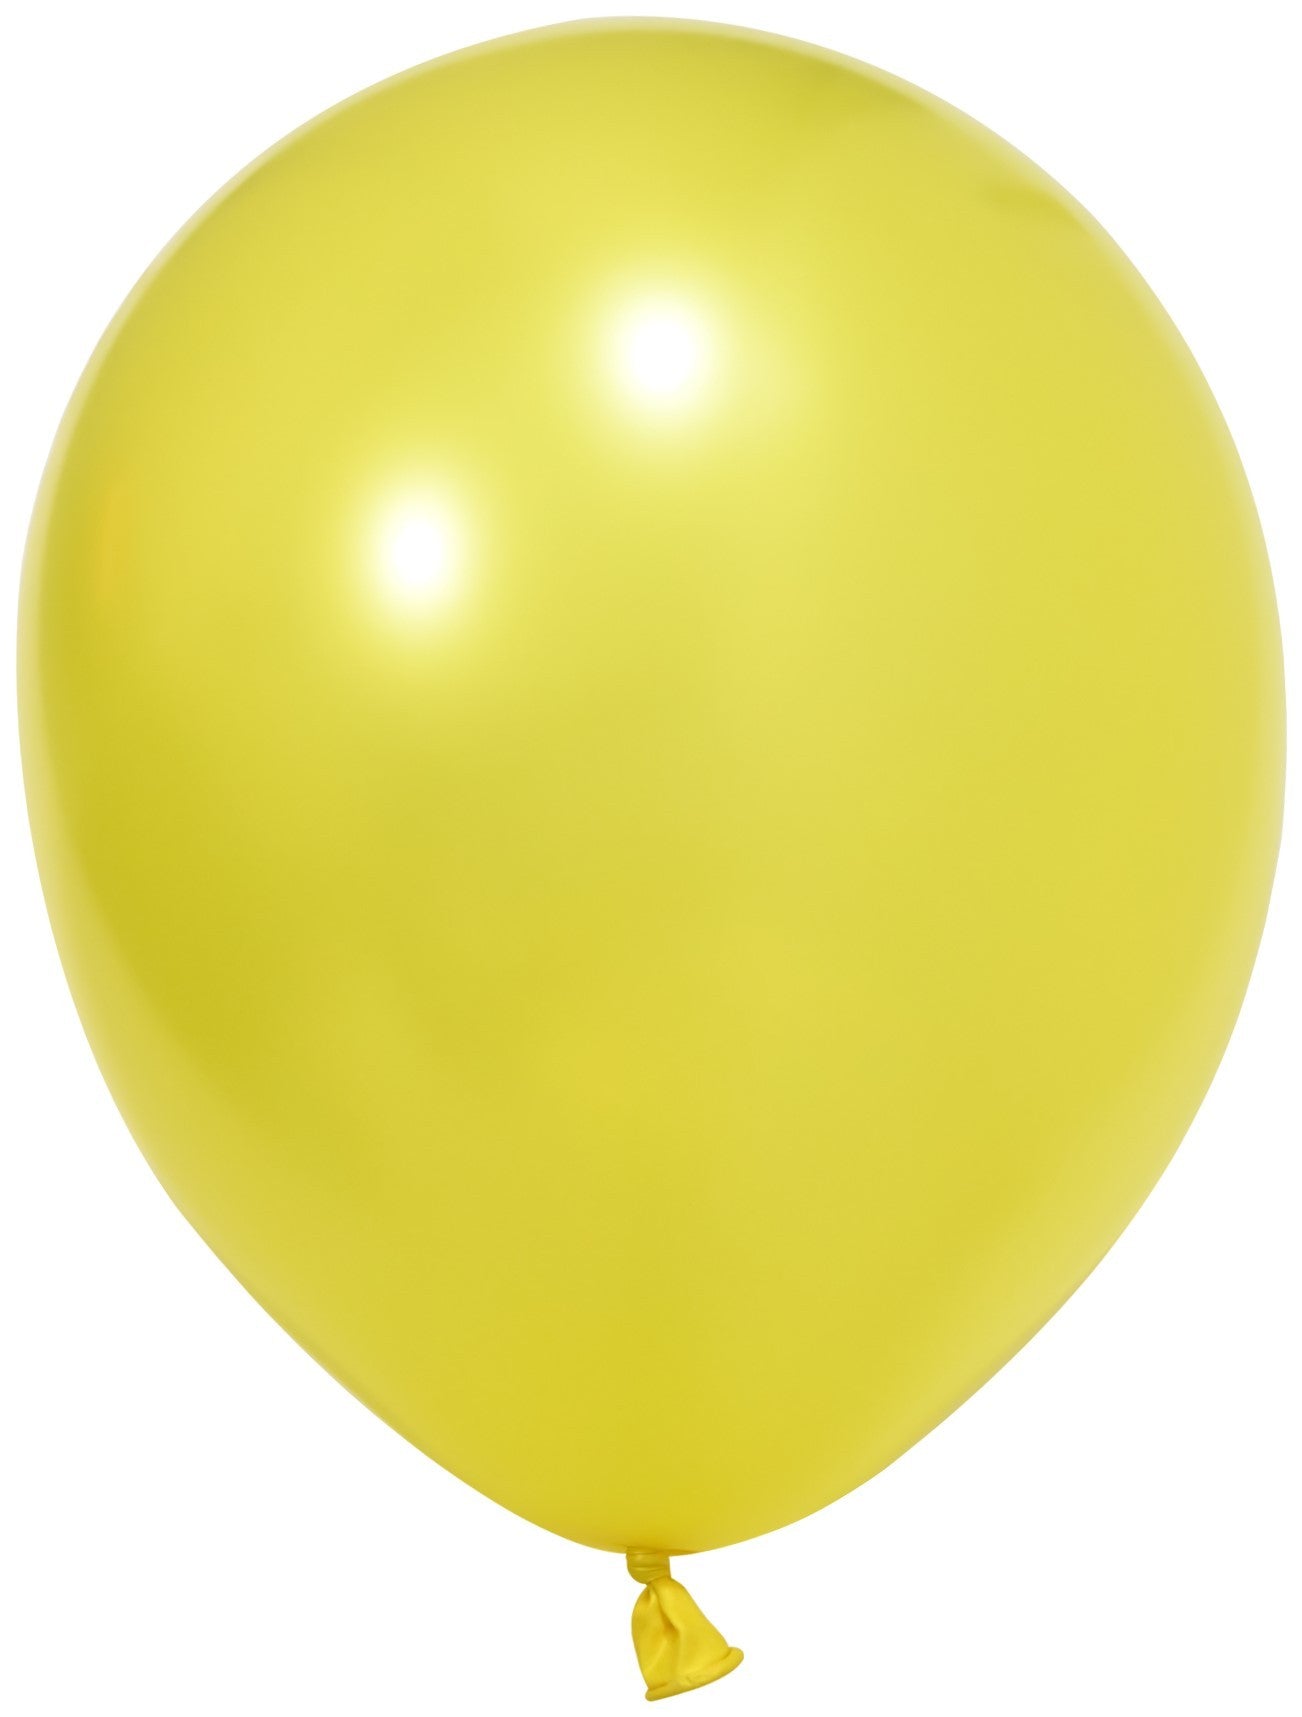 View Yellow Metallic Latex Balloon 10inch Pack of 100 information